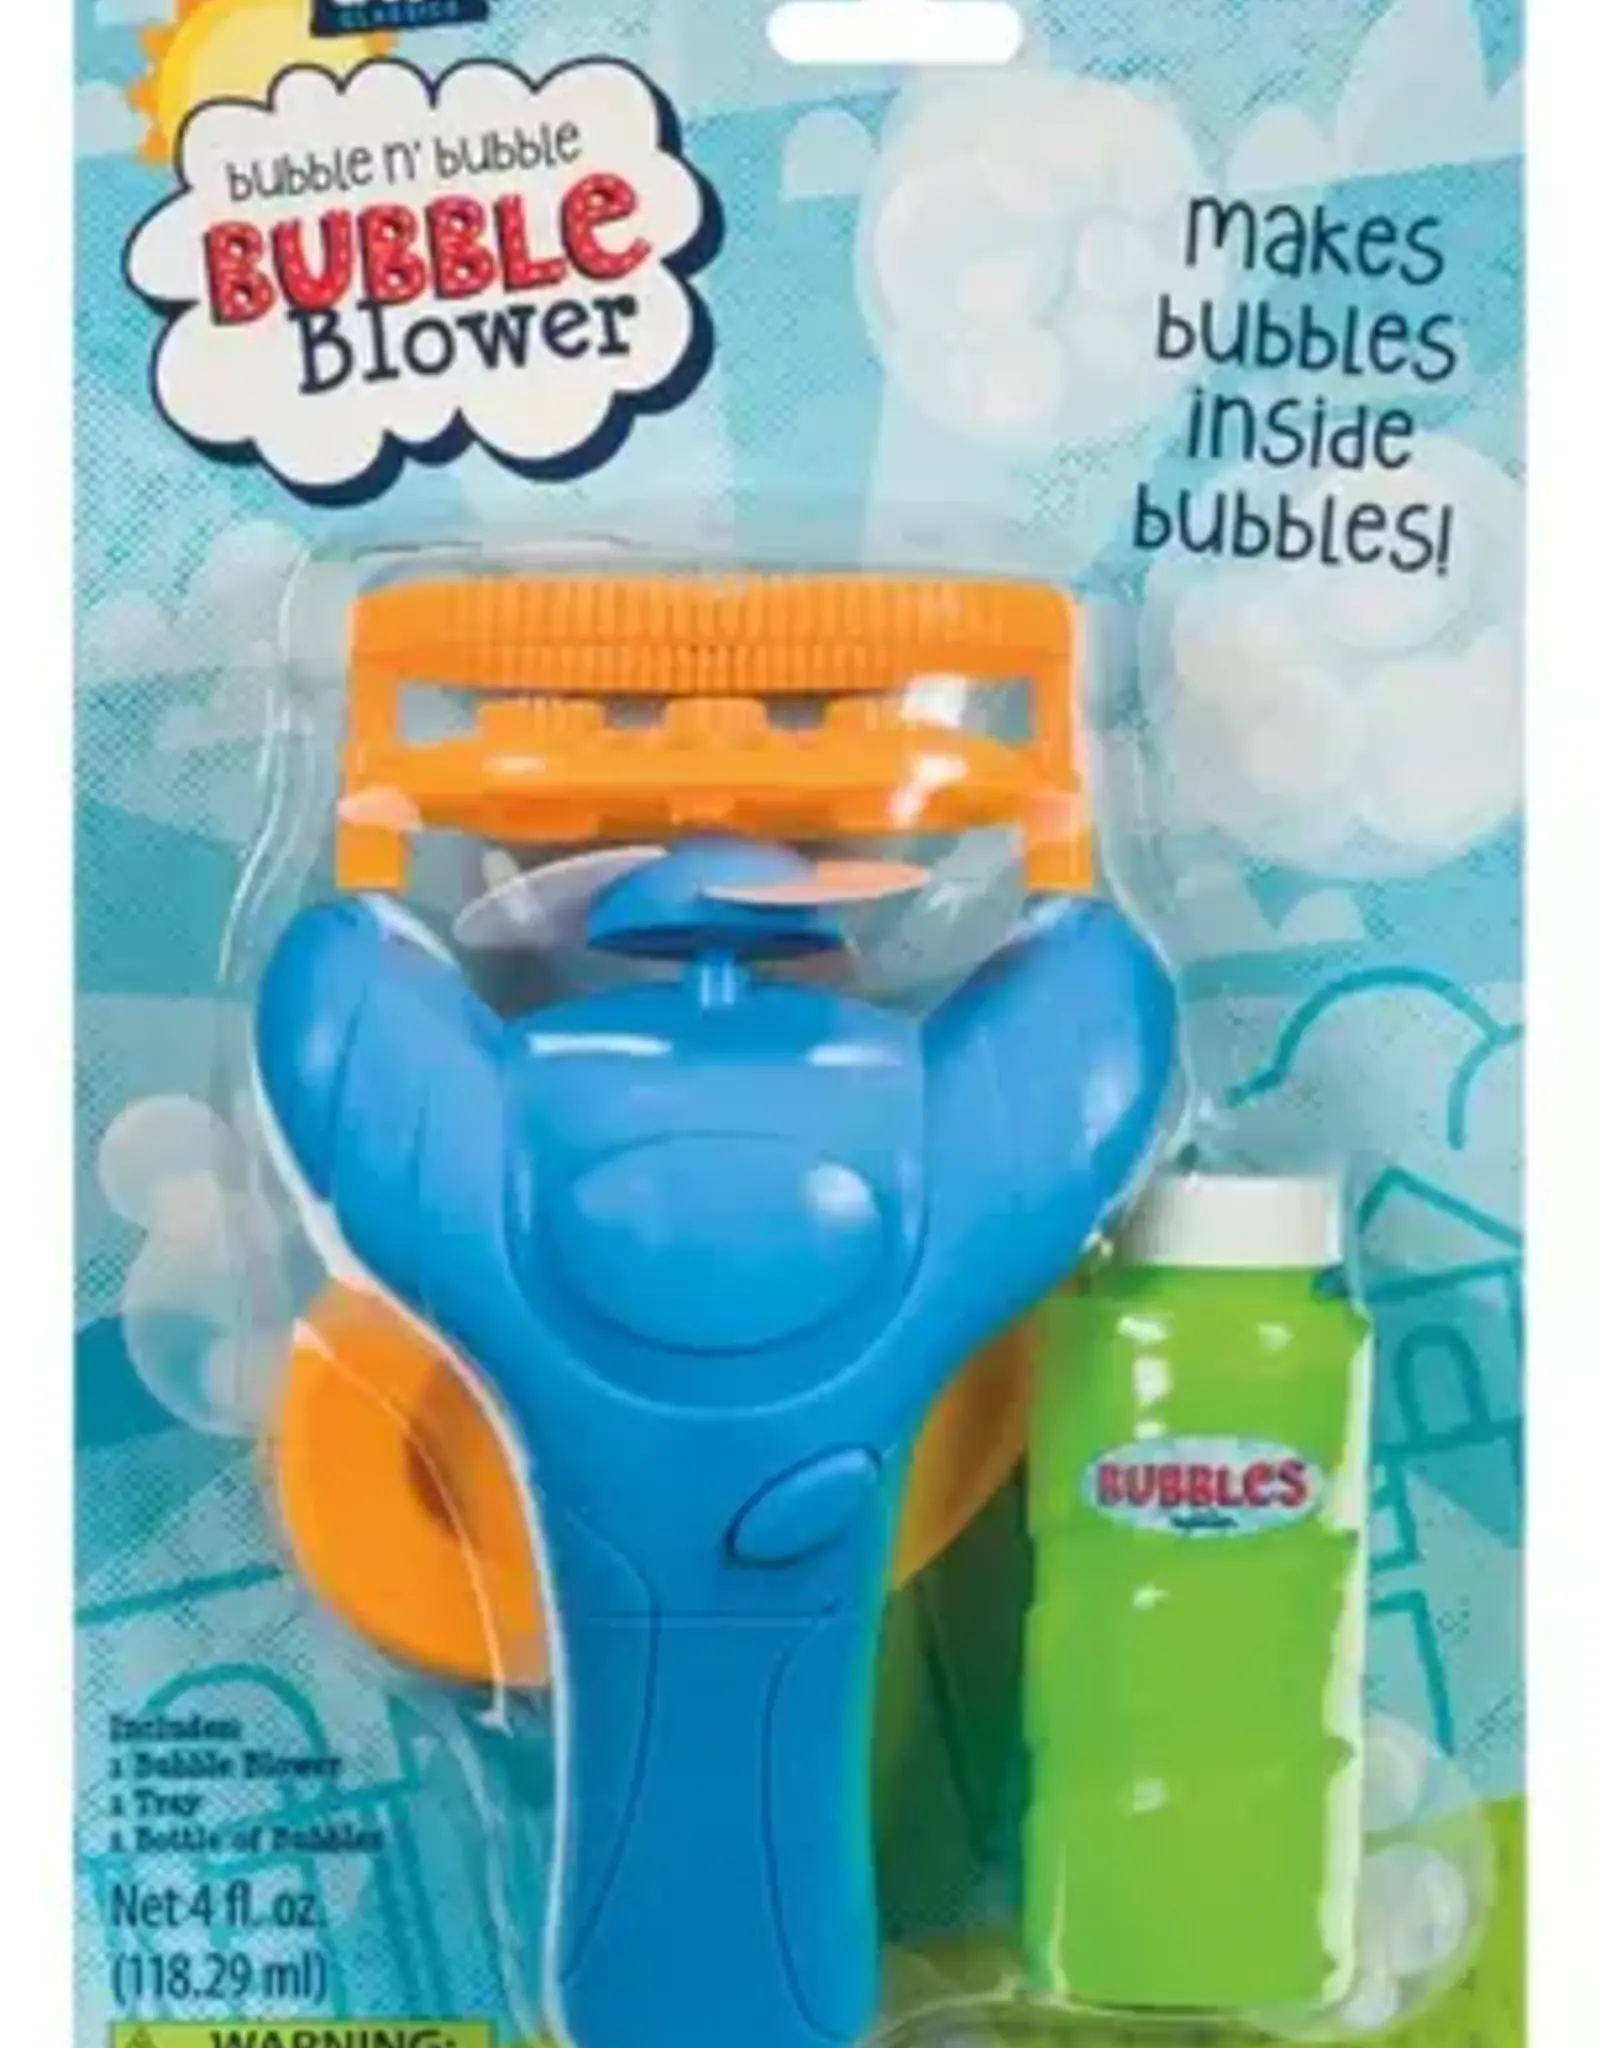 Bubbles in Bubbles Blower